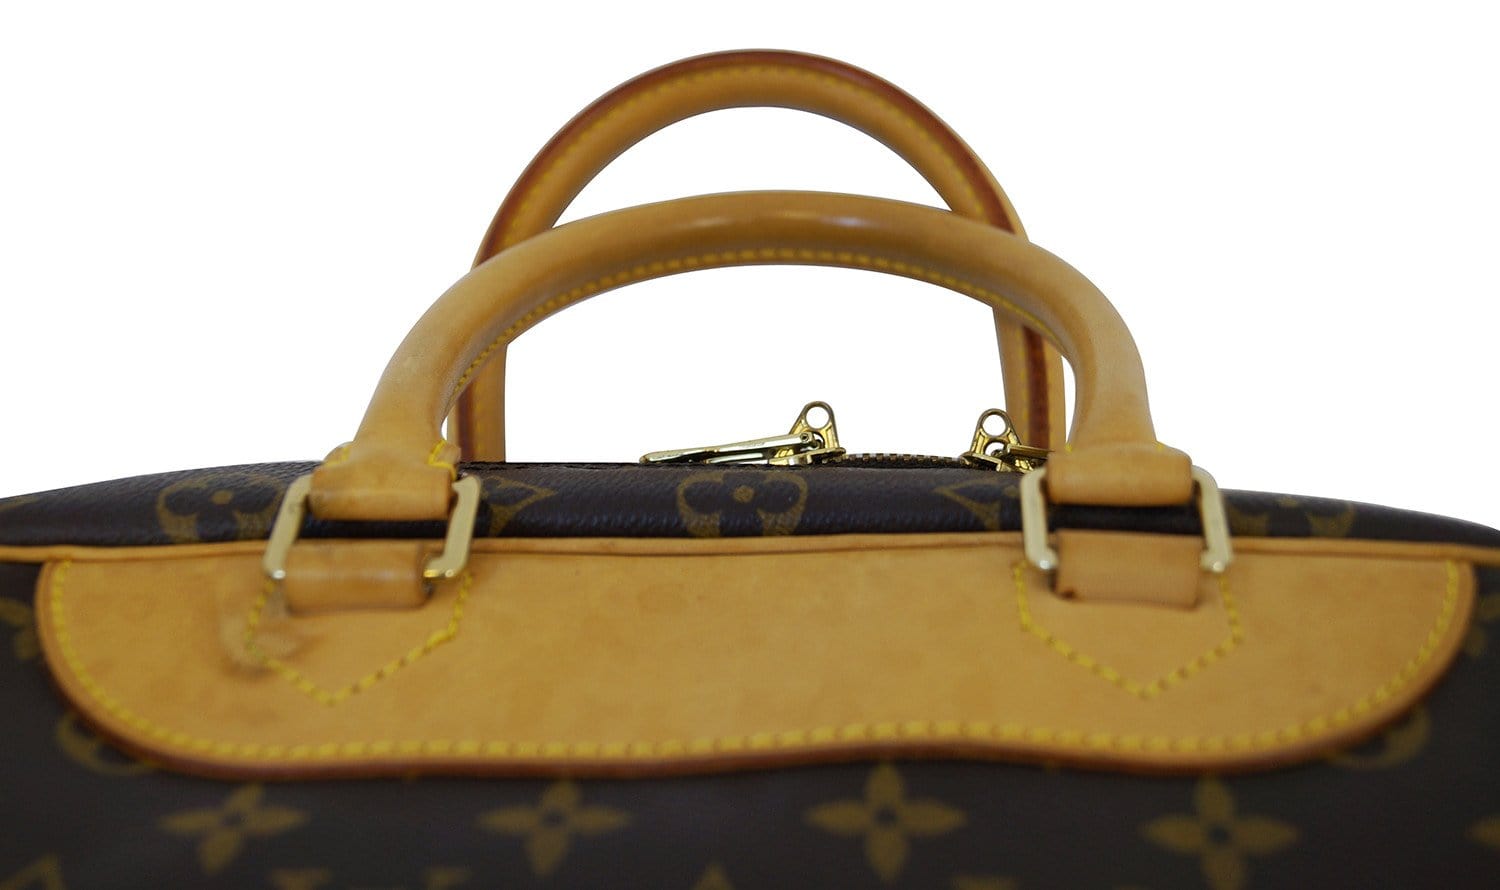 Louis Vuitton Monogram Deauville Bag LVJS633 - Bags of CharmBags of Charm